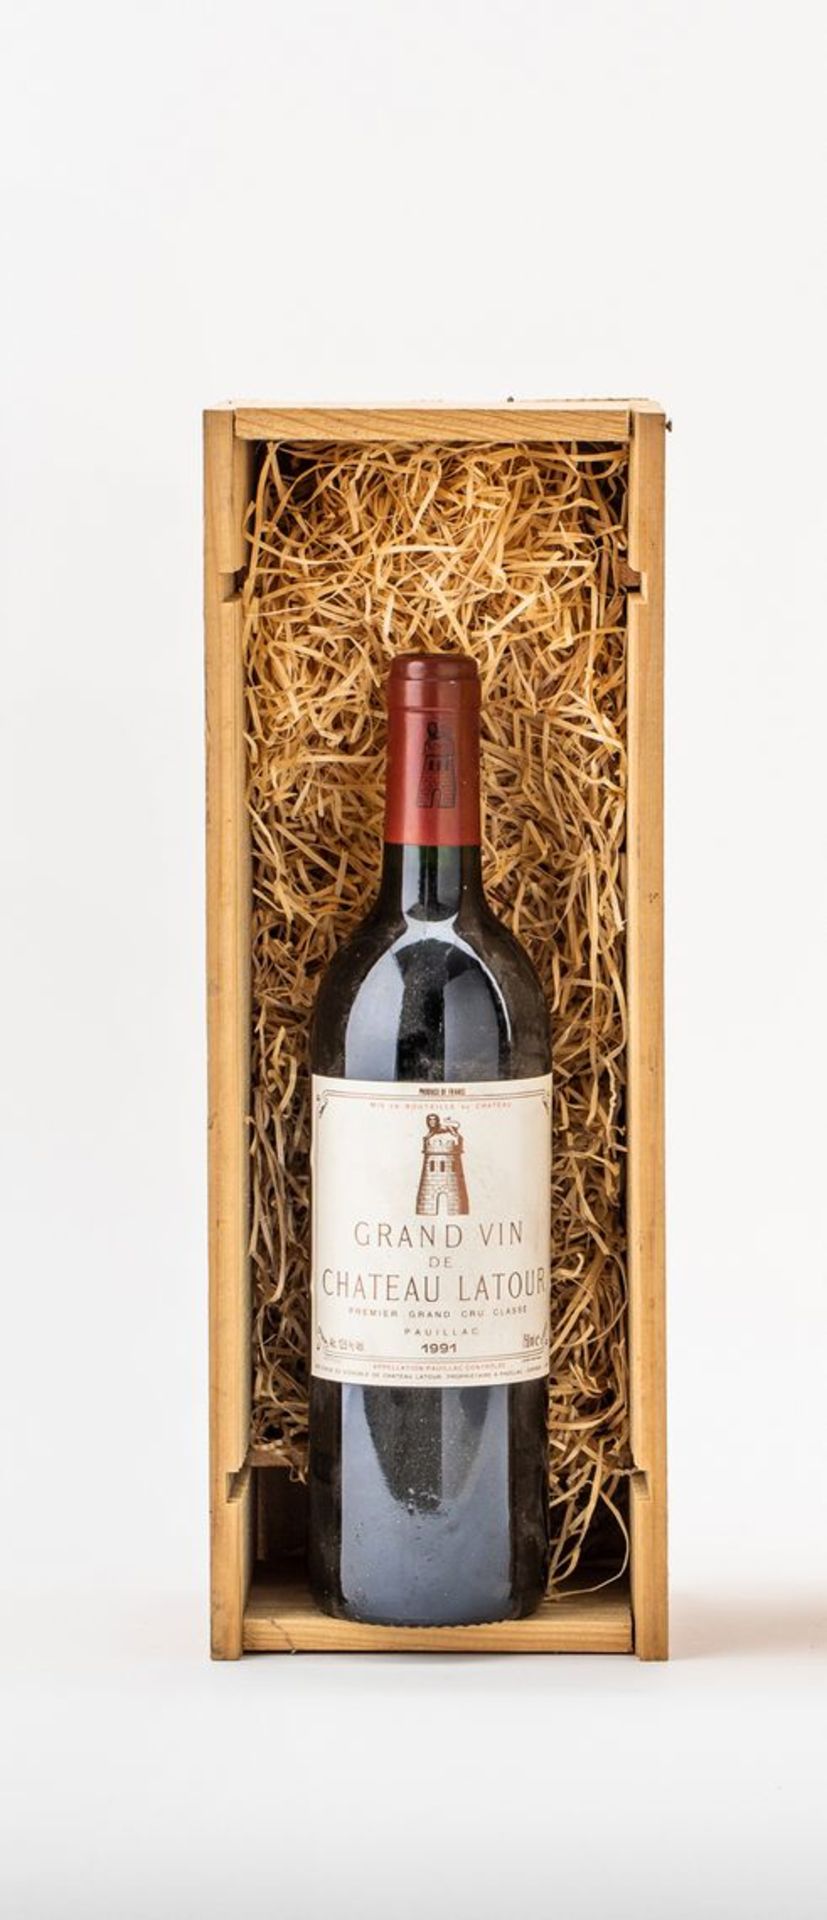 1 Fl. Grand Vin de Chateau Latour 1991Pauillac. Premier Grand Cru Classé. (Oberstes Füllniveau).